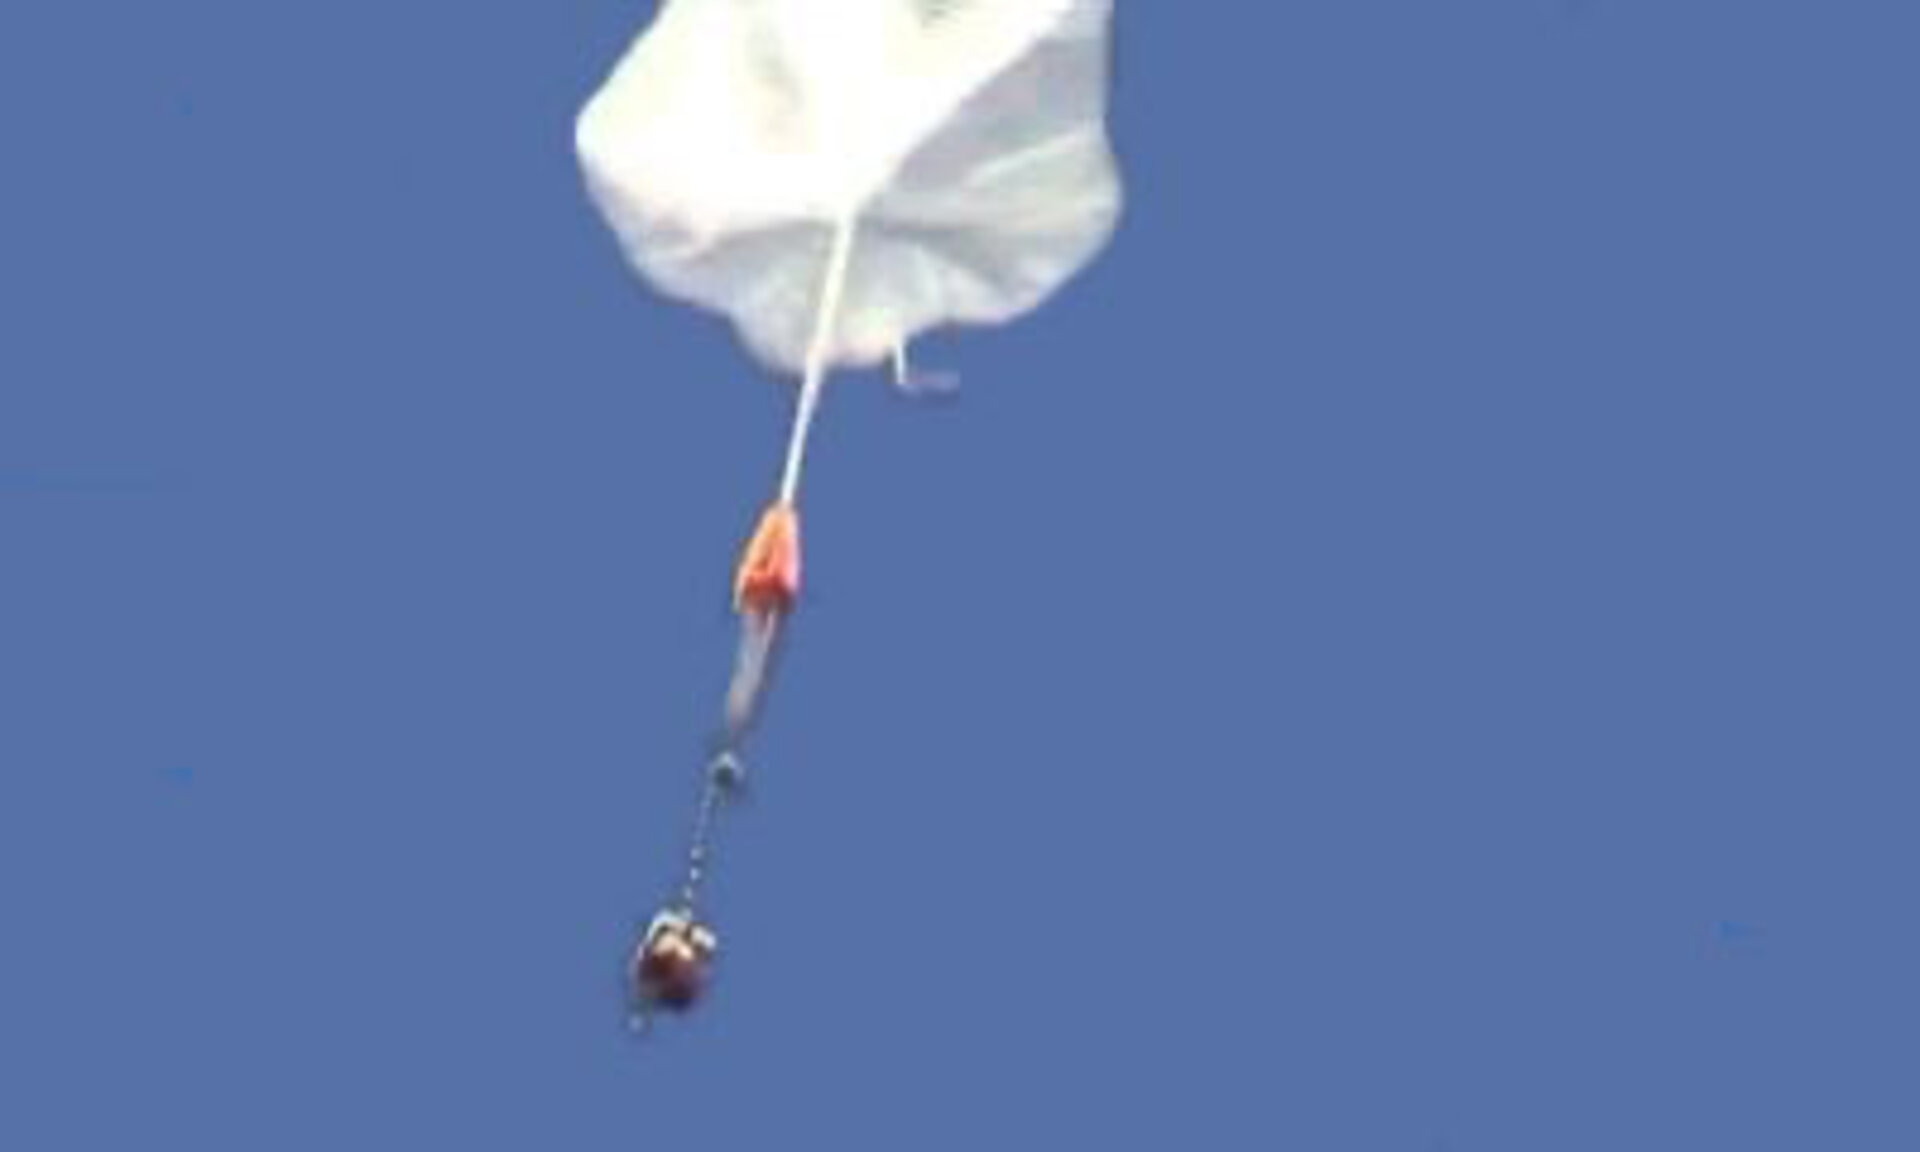 Balloon, gondola and probe go up